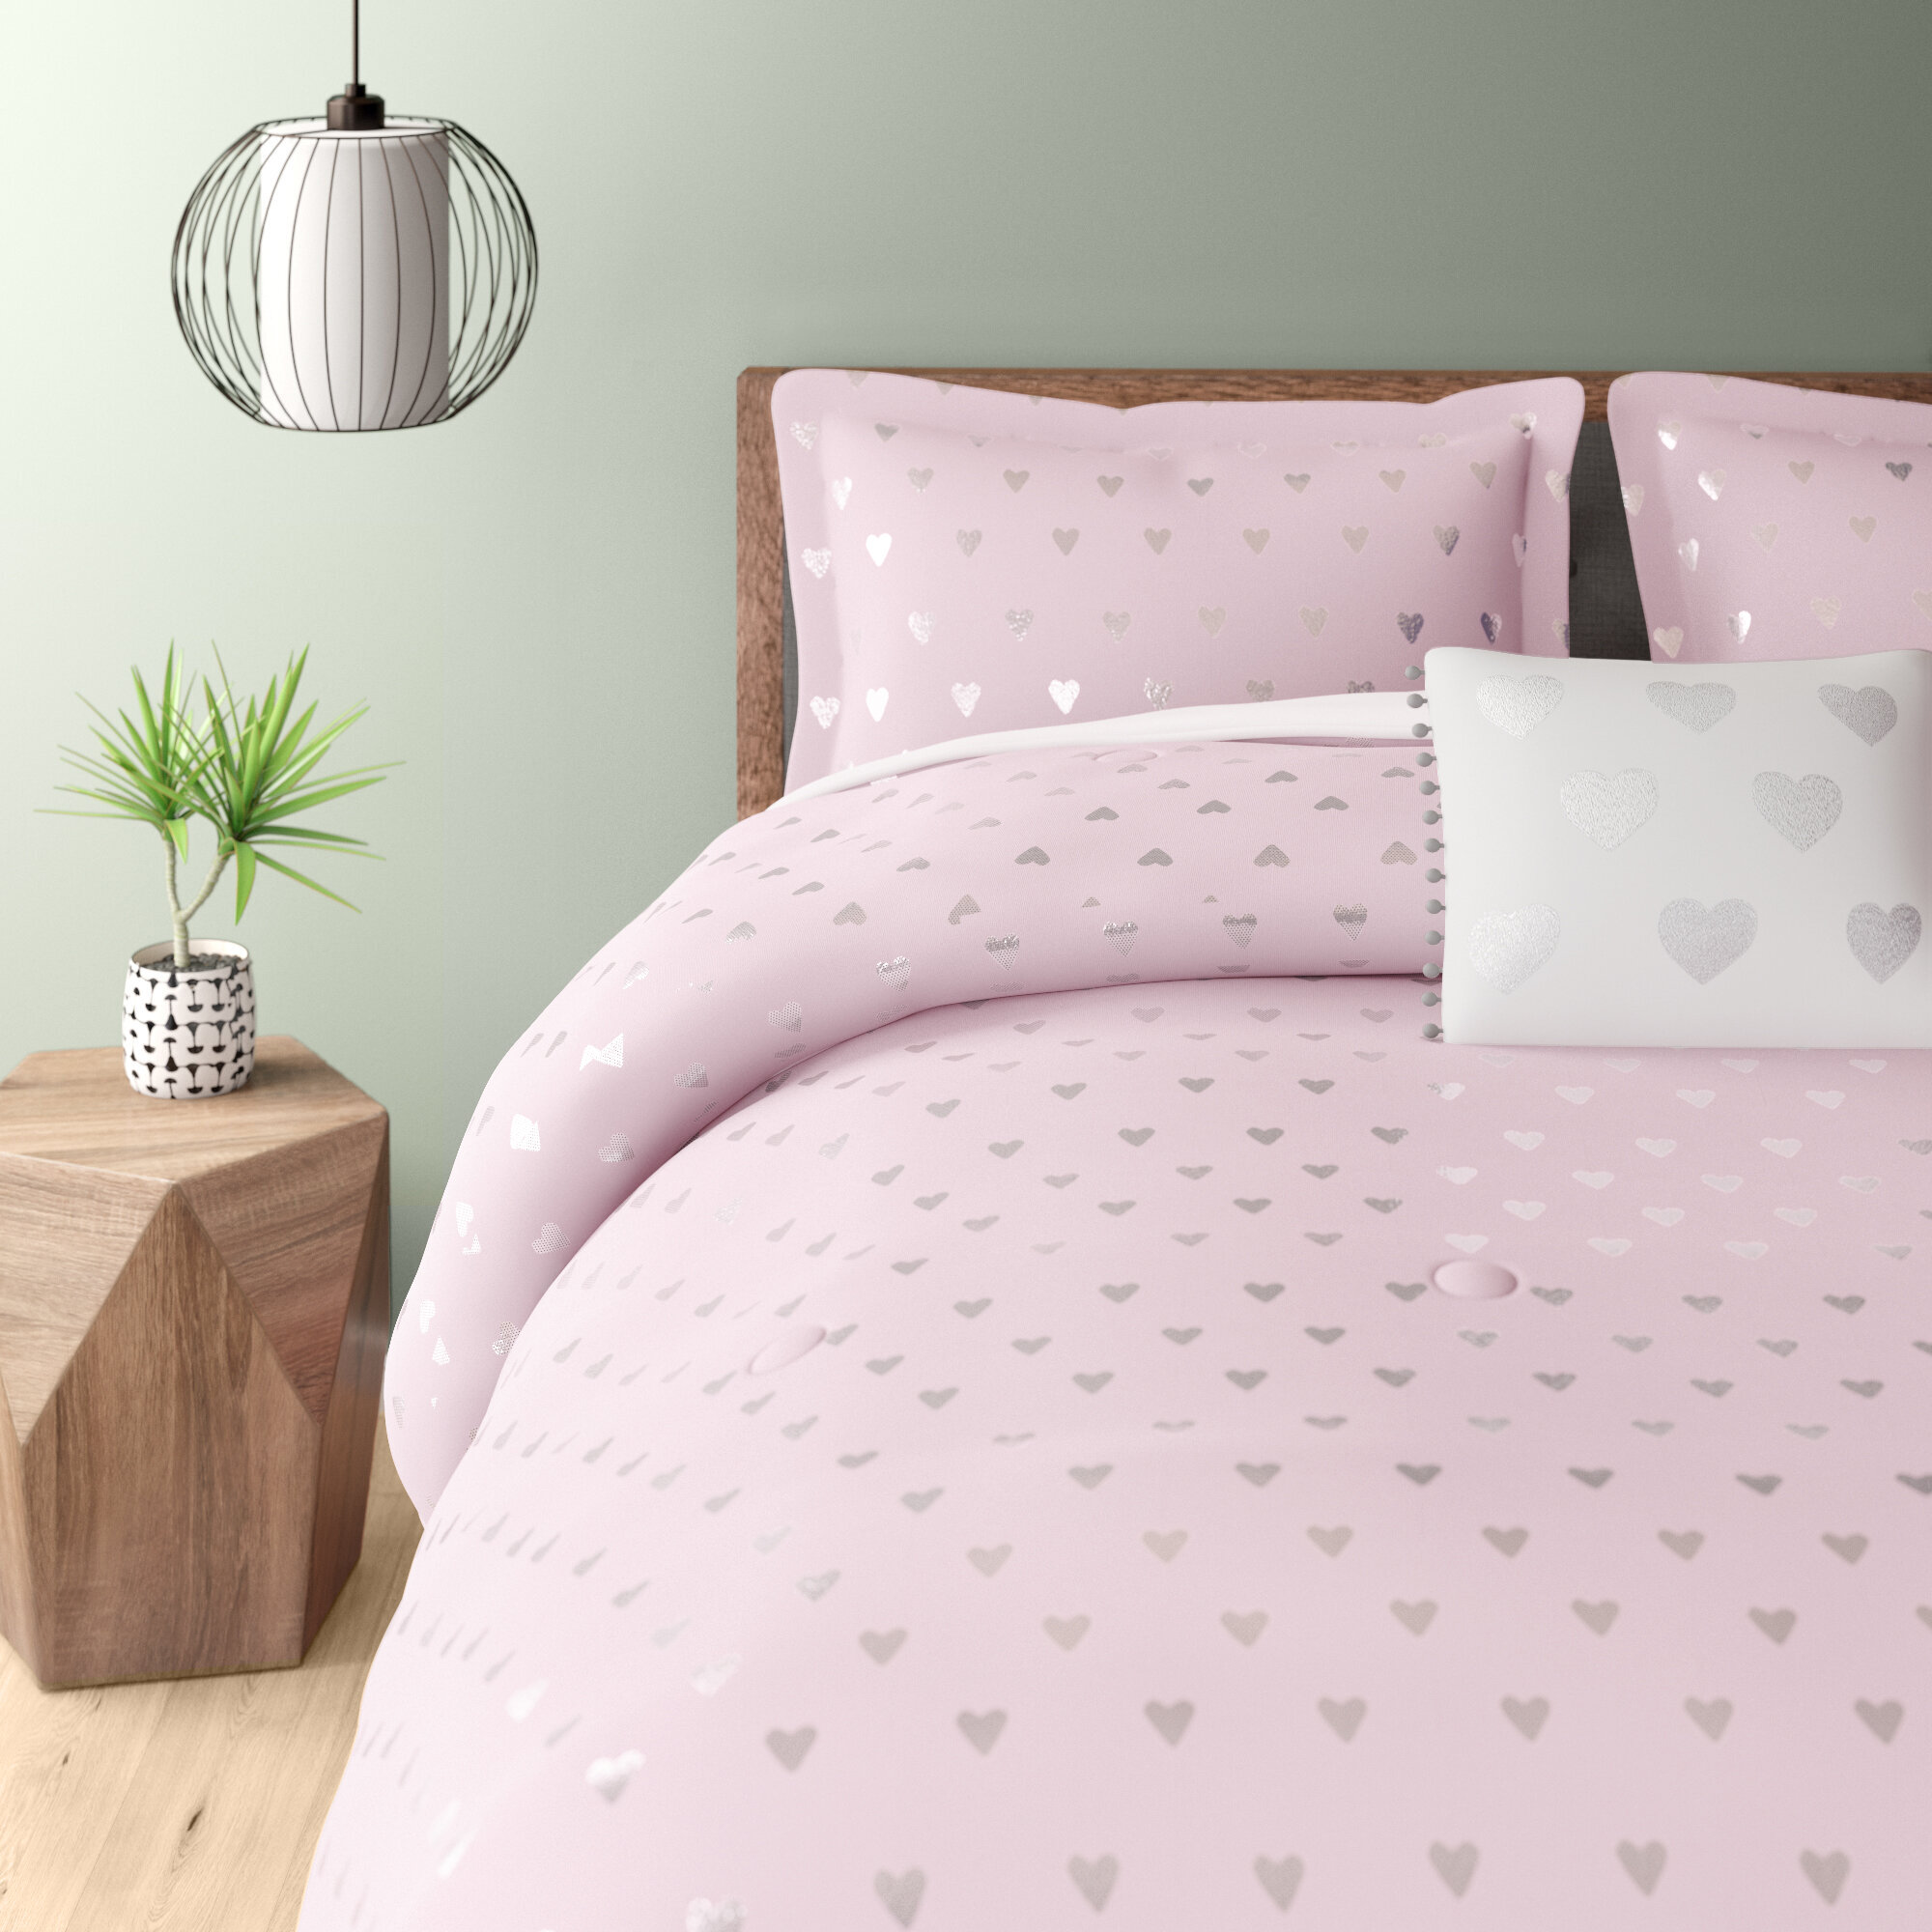 Girls Bedding Full Size Set Comforter Sheet Sham 8 Piece Comfort Purple Bed New 